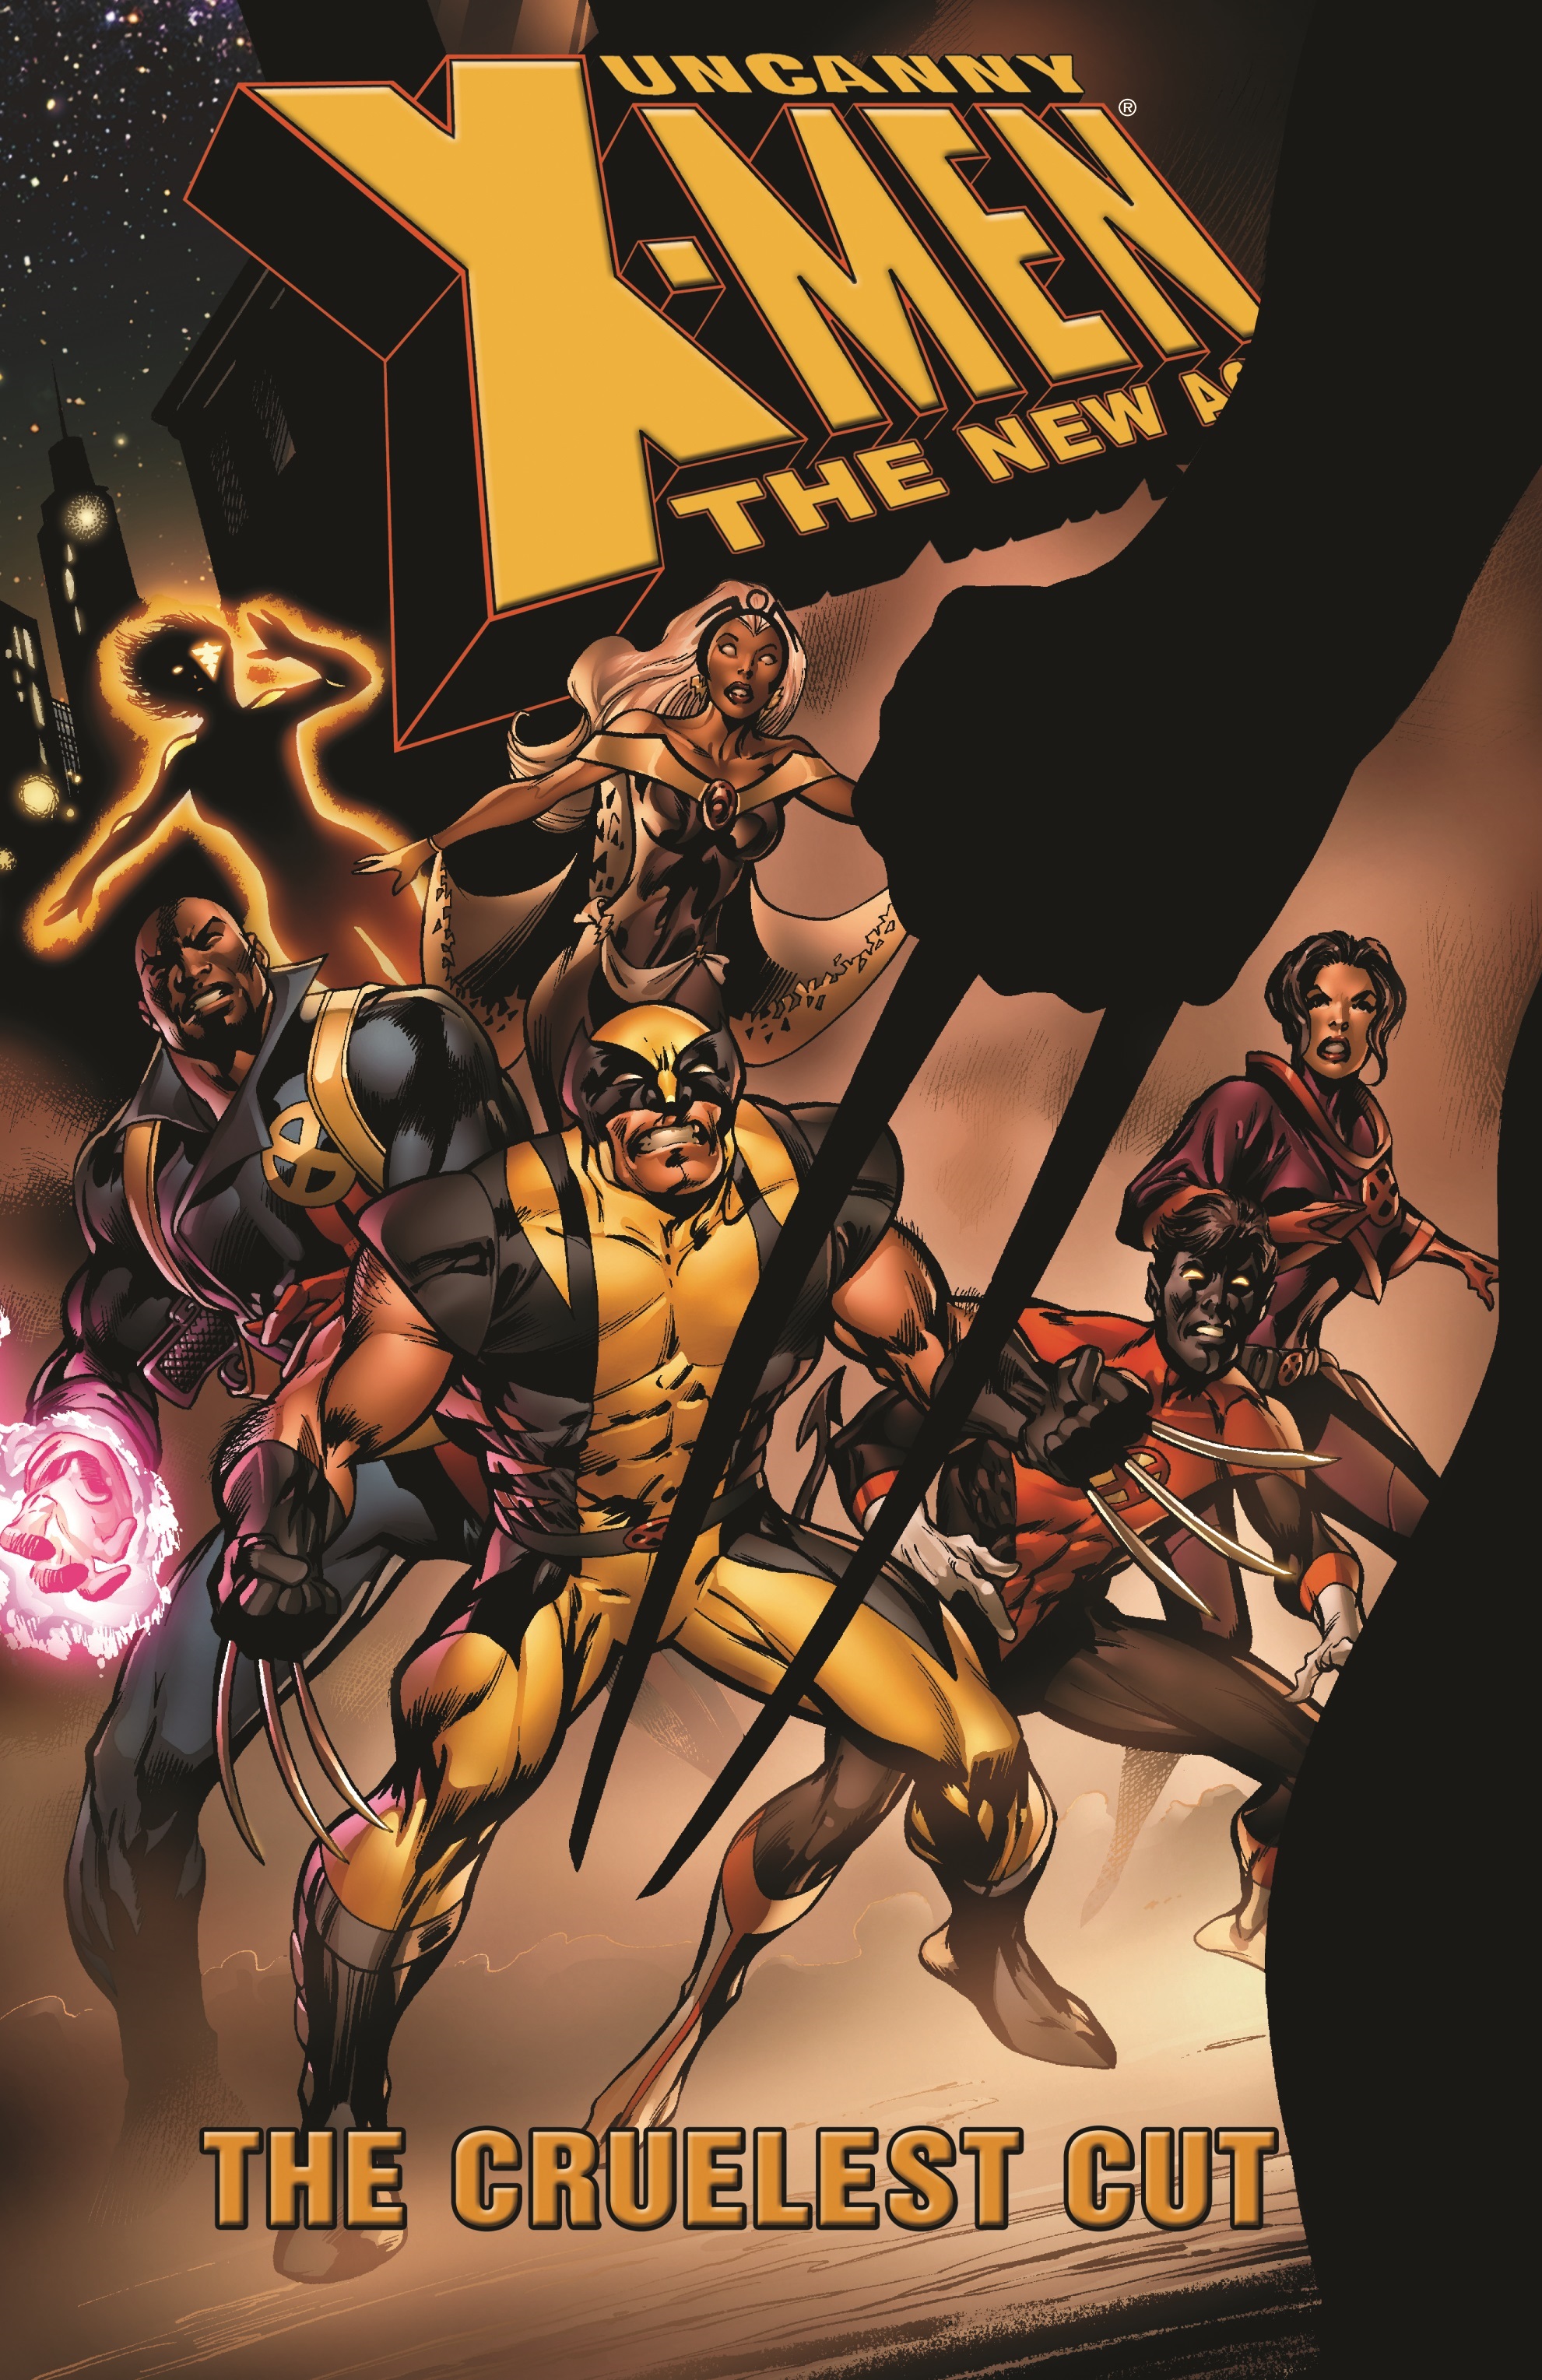 Uncanny X-Men - The New Age Vol. 2: The Cruelest Cut (Trade Paperback)